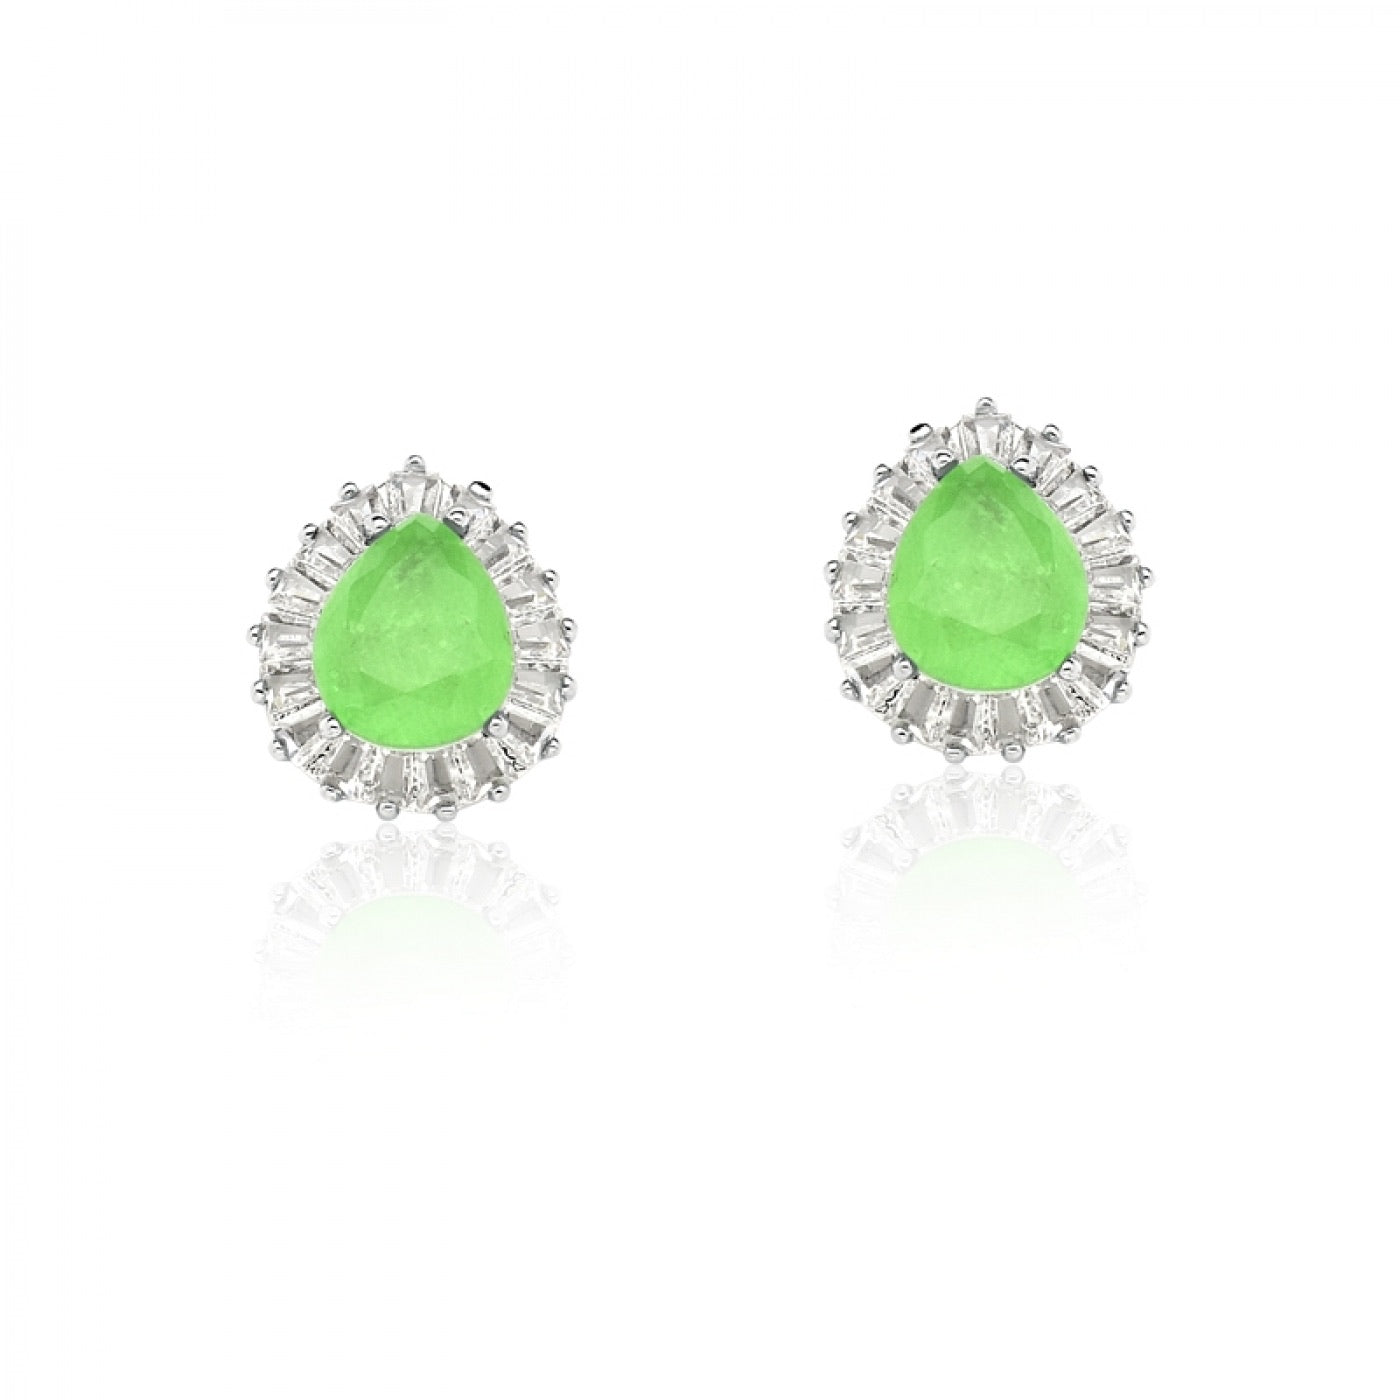 Earring drop shape green glow and zirconia